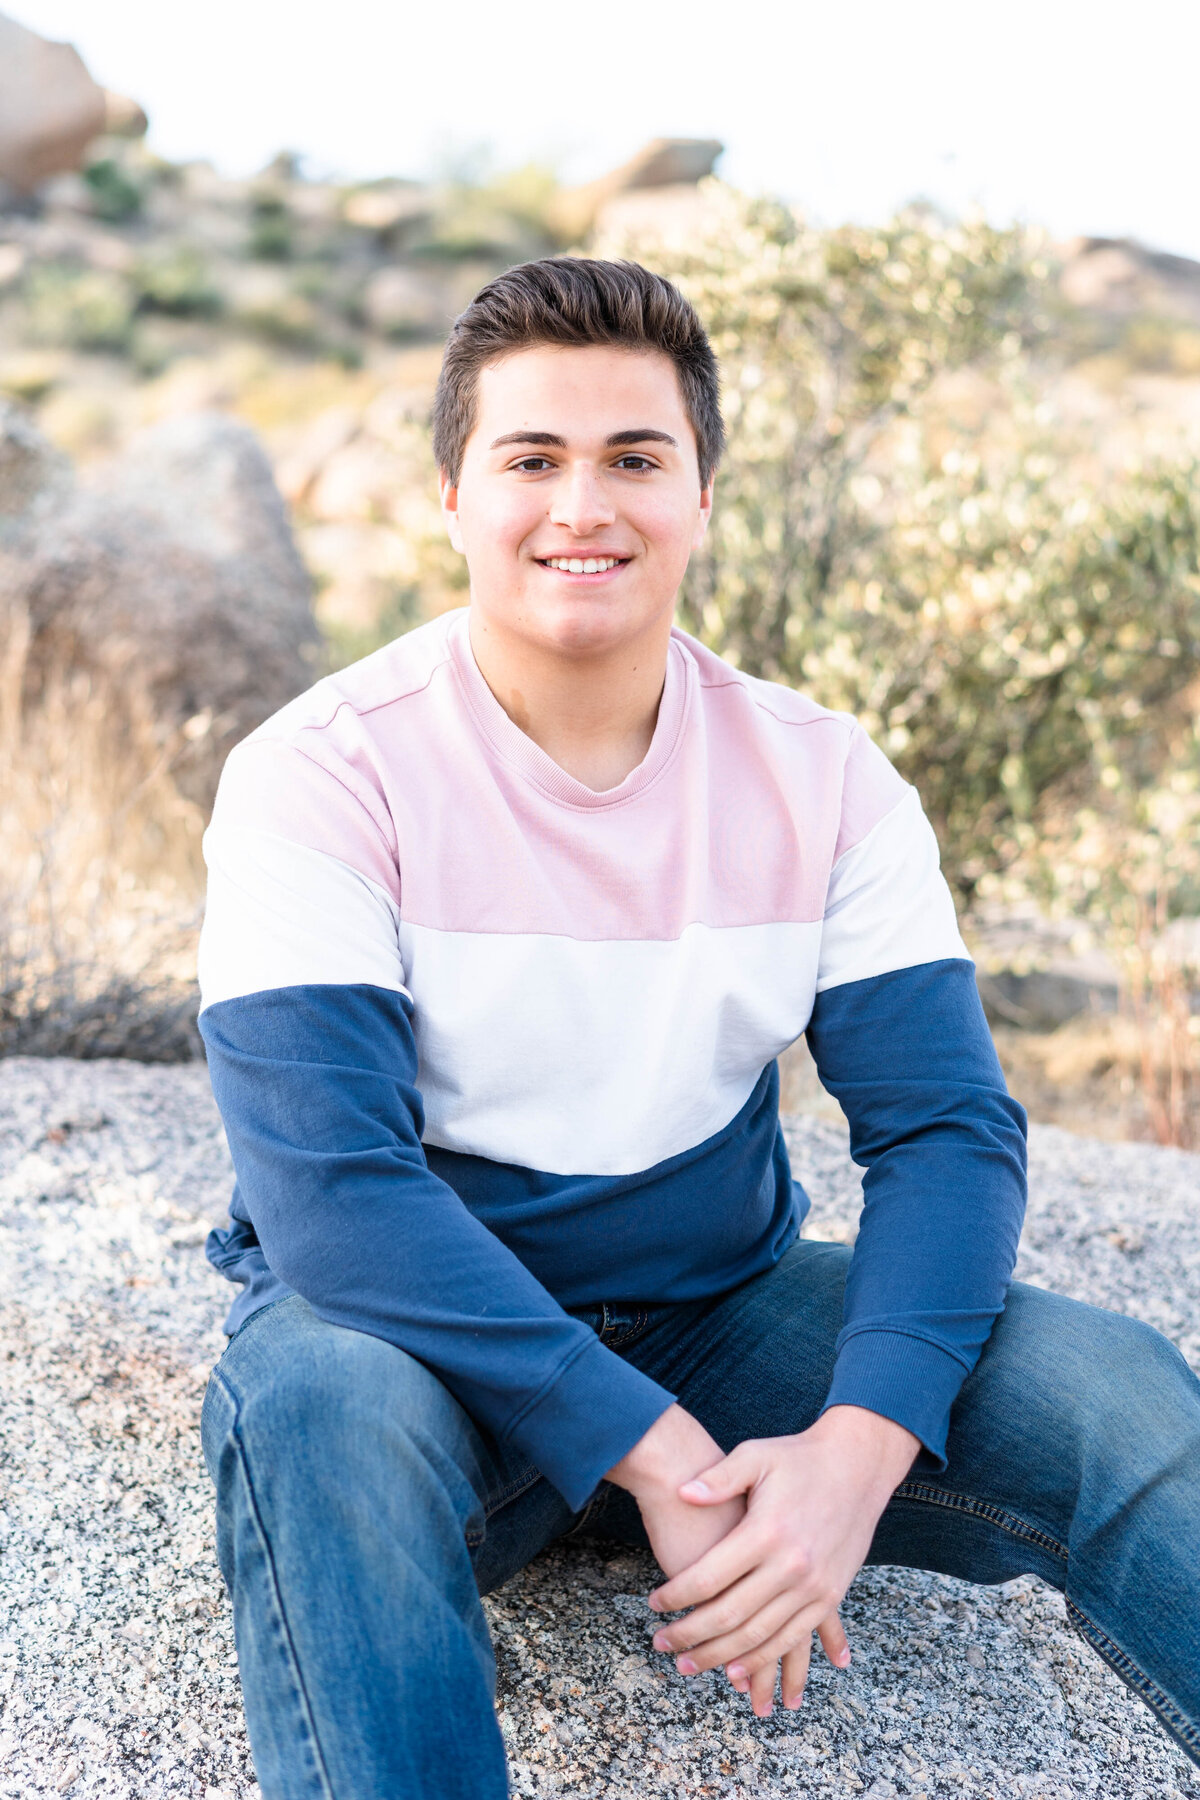 High school boy sitting on rock in desert smiling